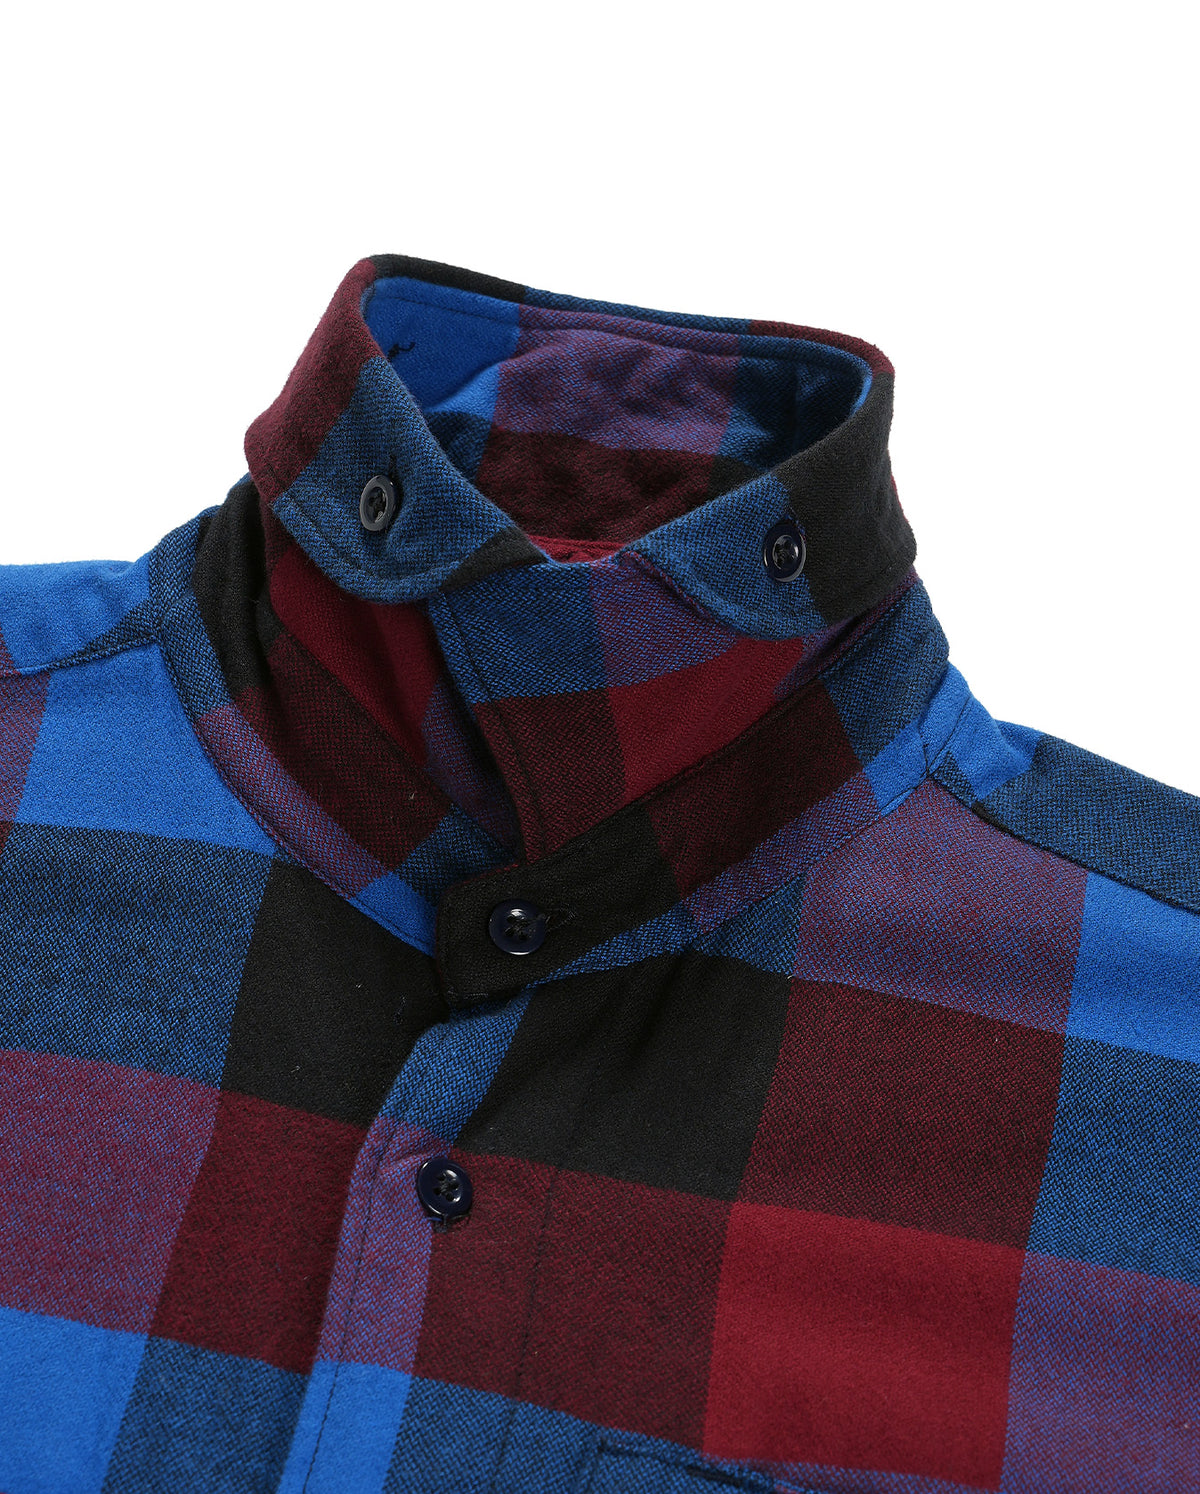 Trail Cotton Block Check Shirt - Blue/Red